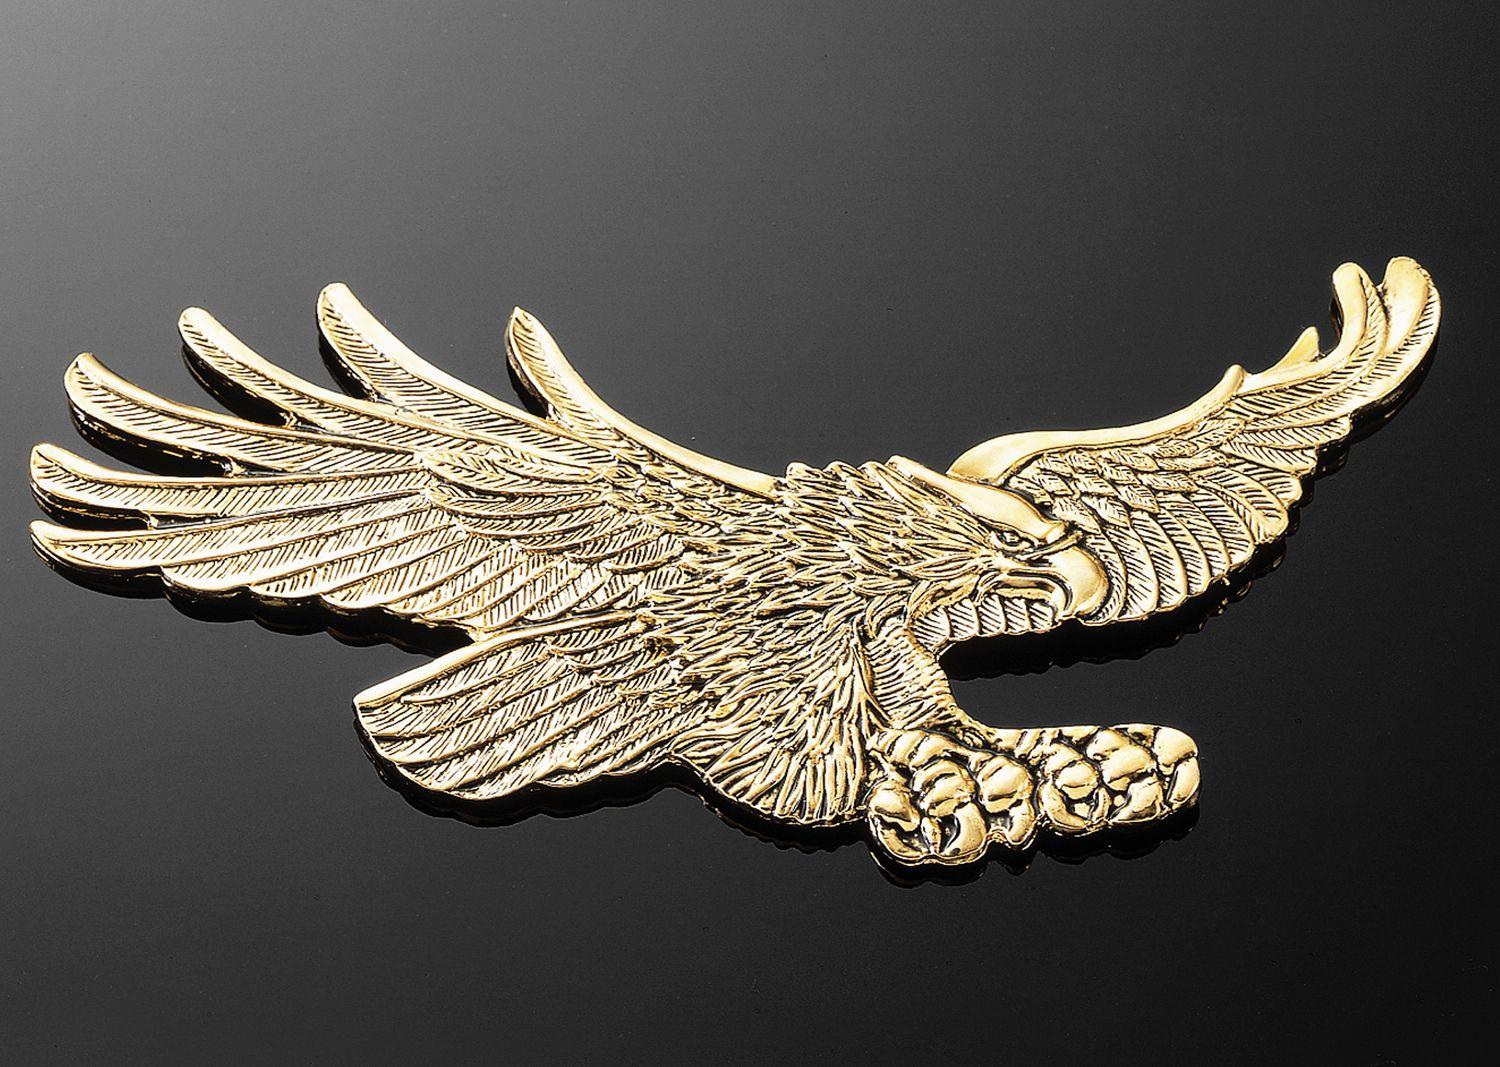 Small American Eagle Logo - Highway Hawk Small American hawk eagle emblem for motorcycles/trikes ...